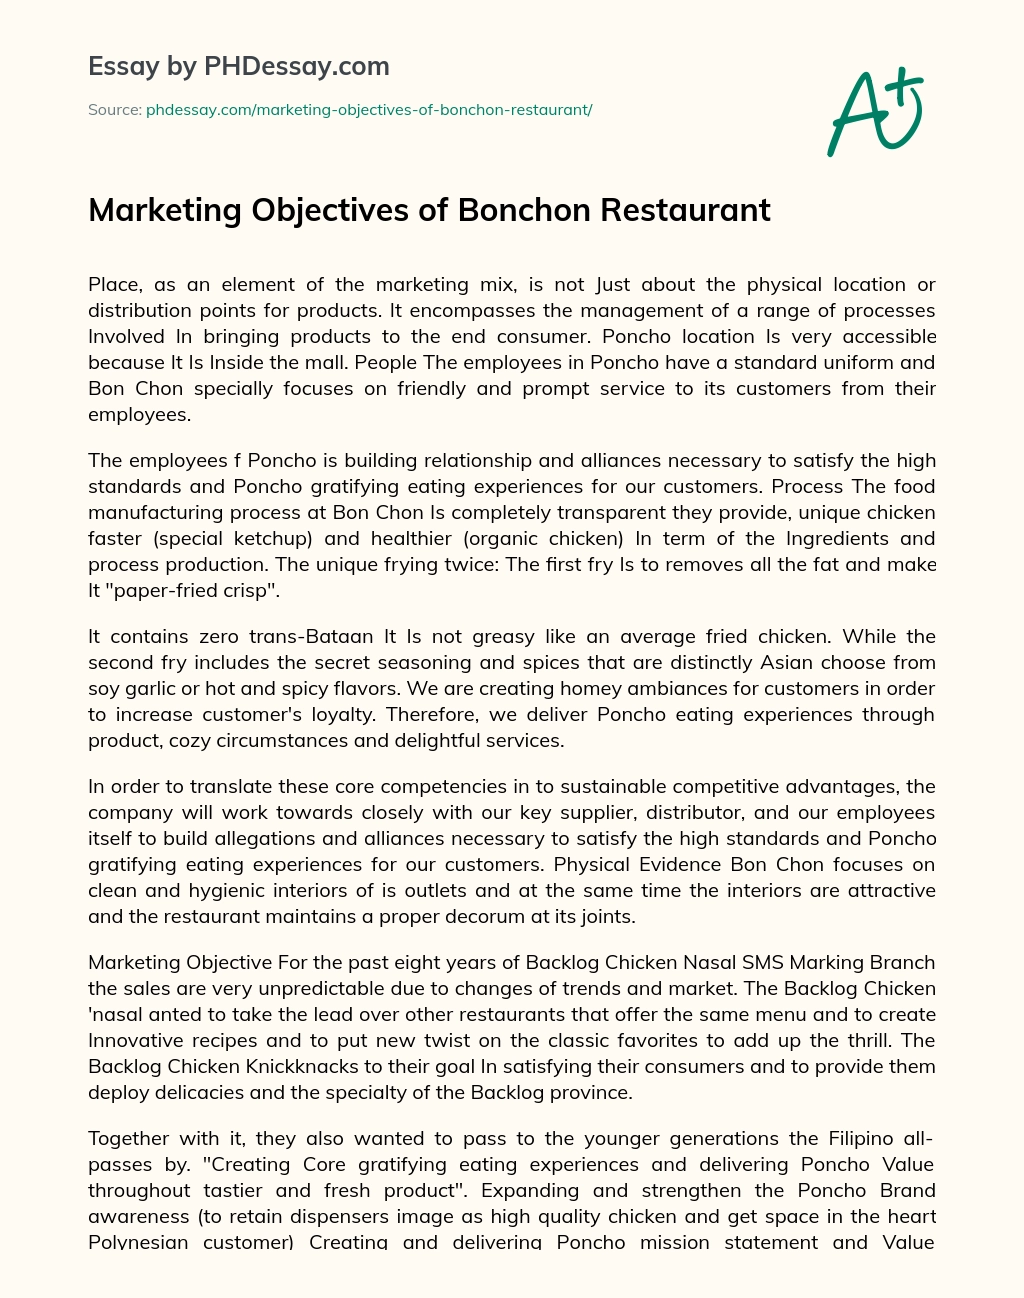 Marketing Objectives of Bonchon Restaurant essay